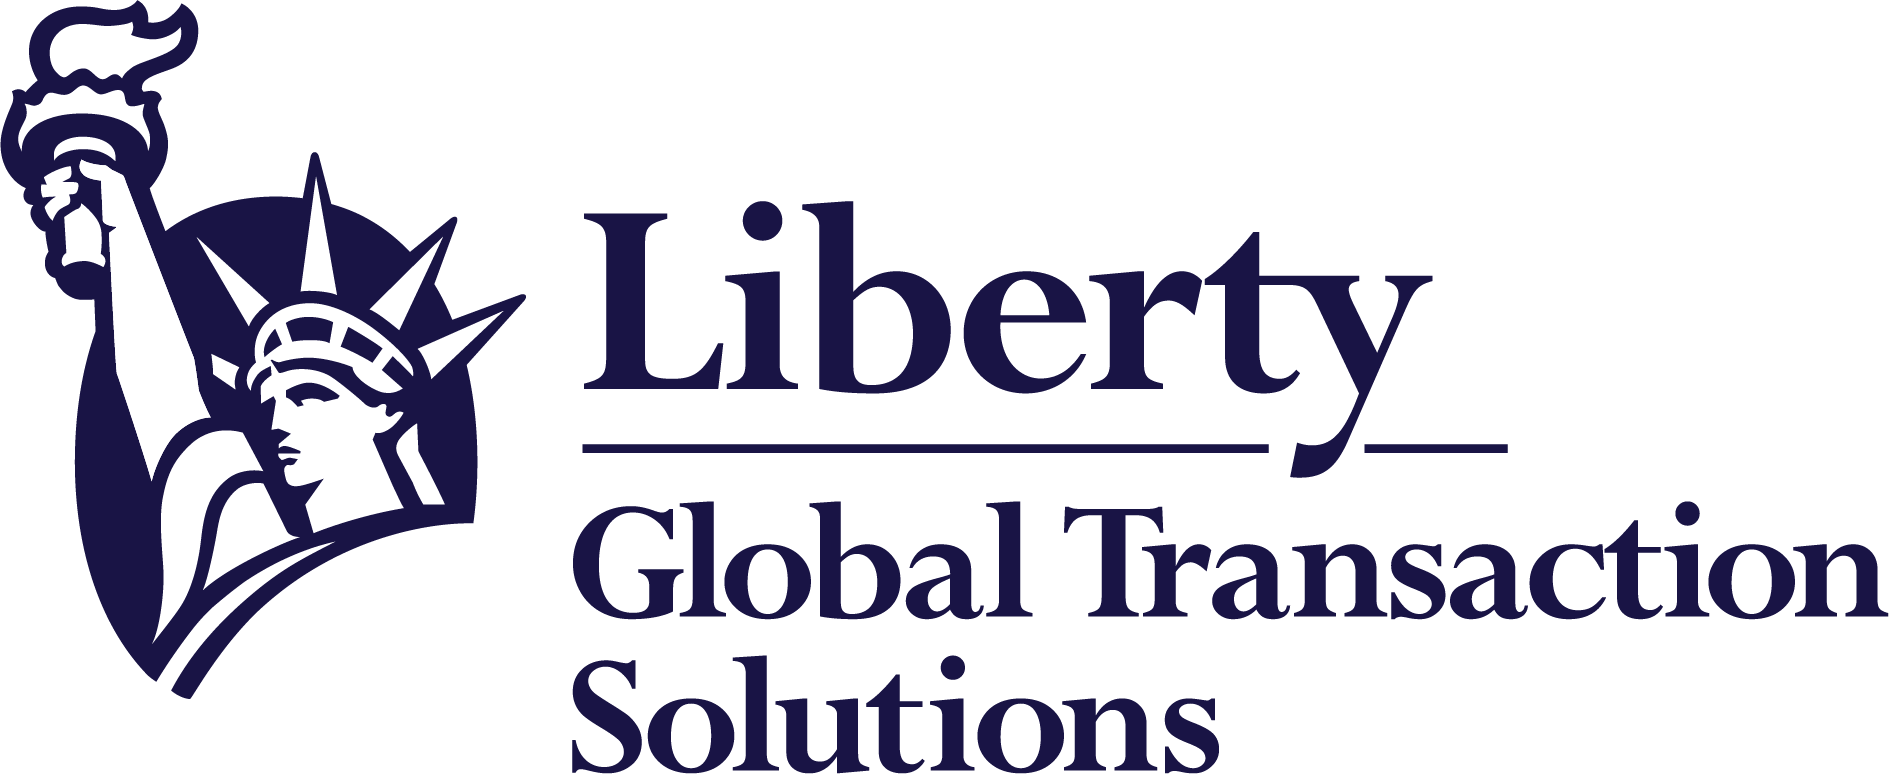 Liberty Global Transaction Solutions Logo PNG image